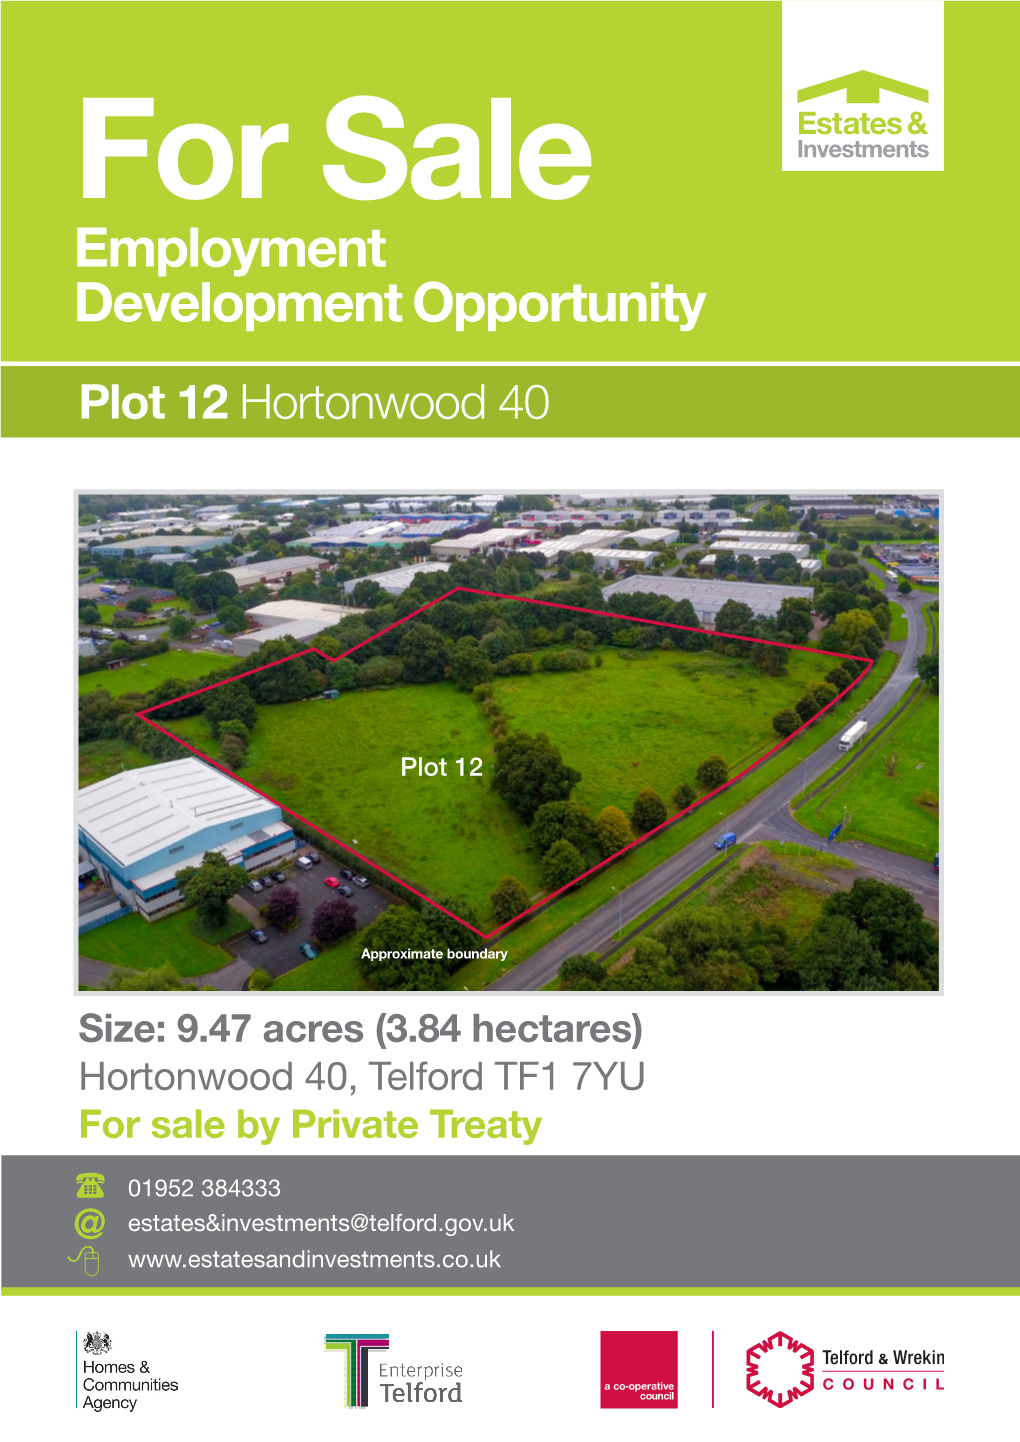 Employment Development Opportunity Plot 12 Hortonwood 40